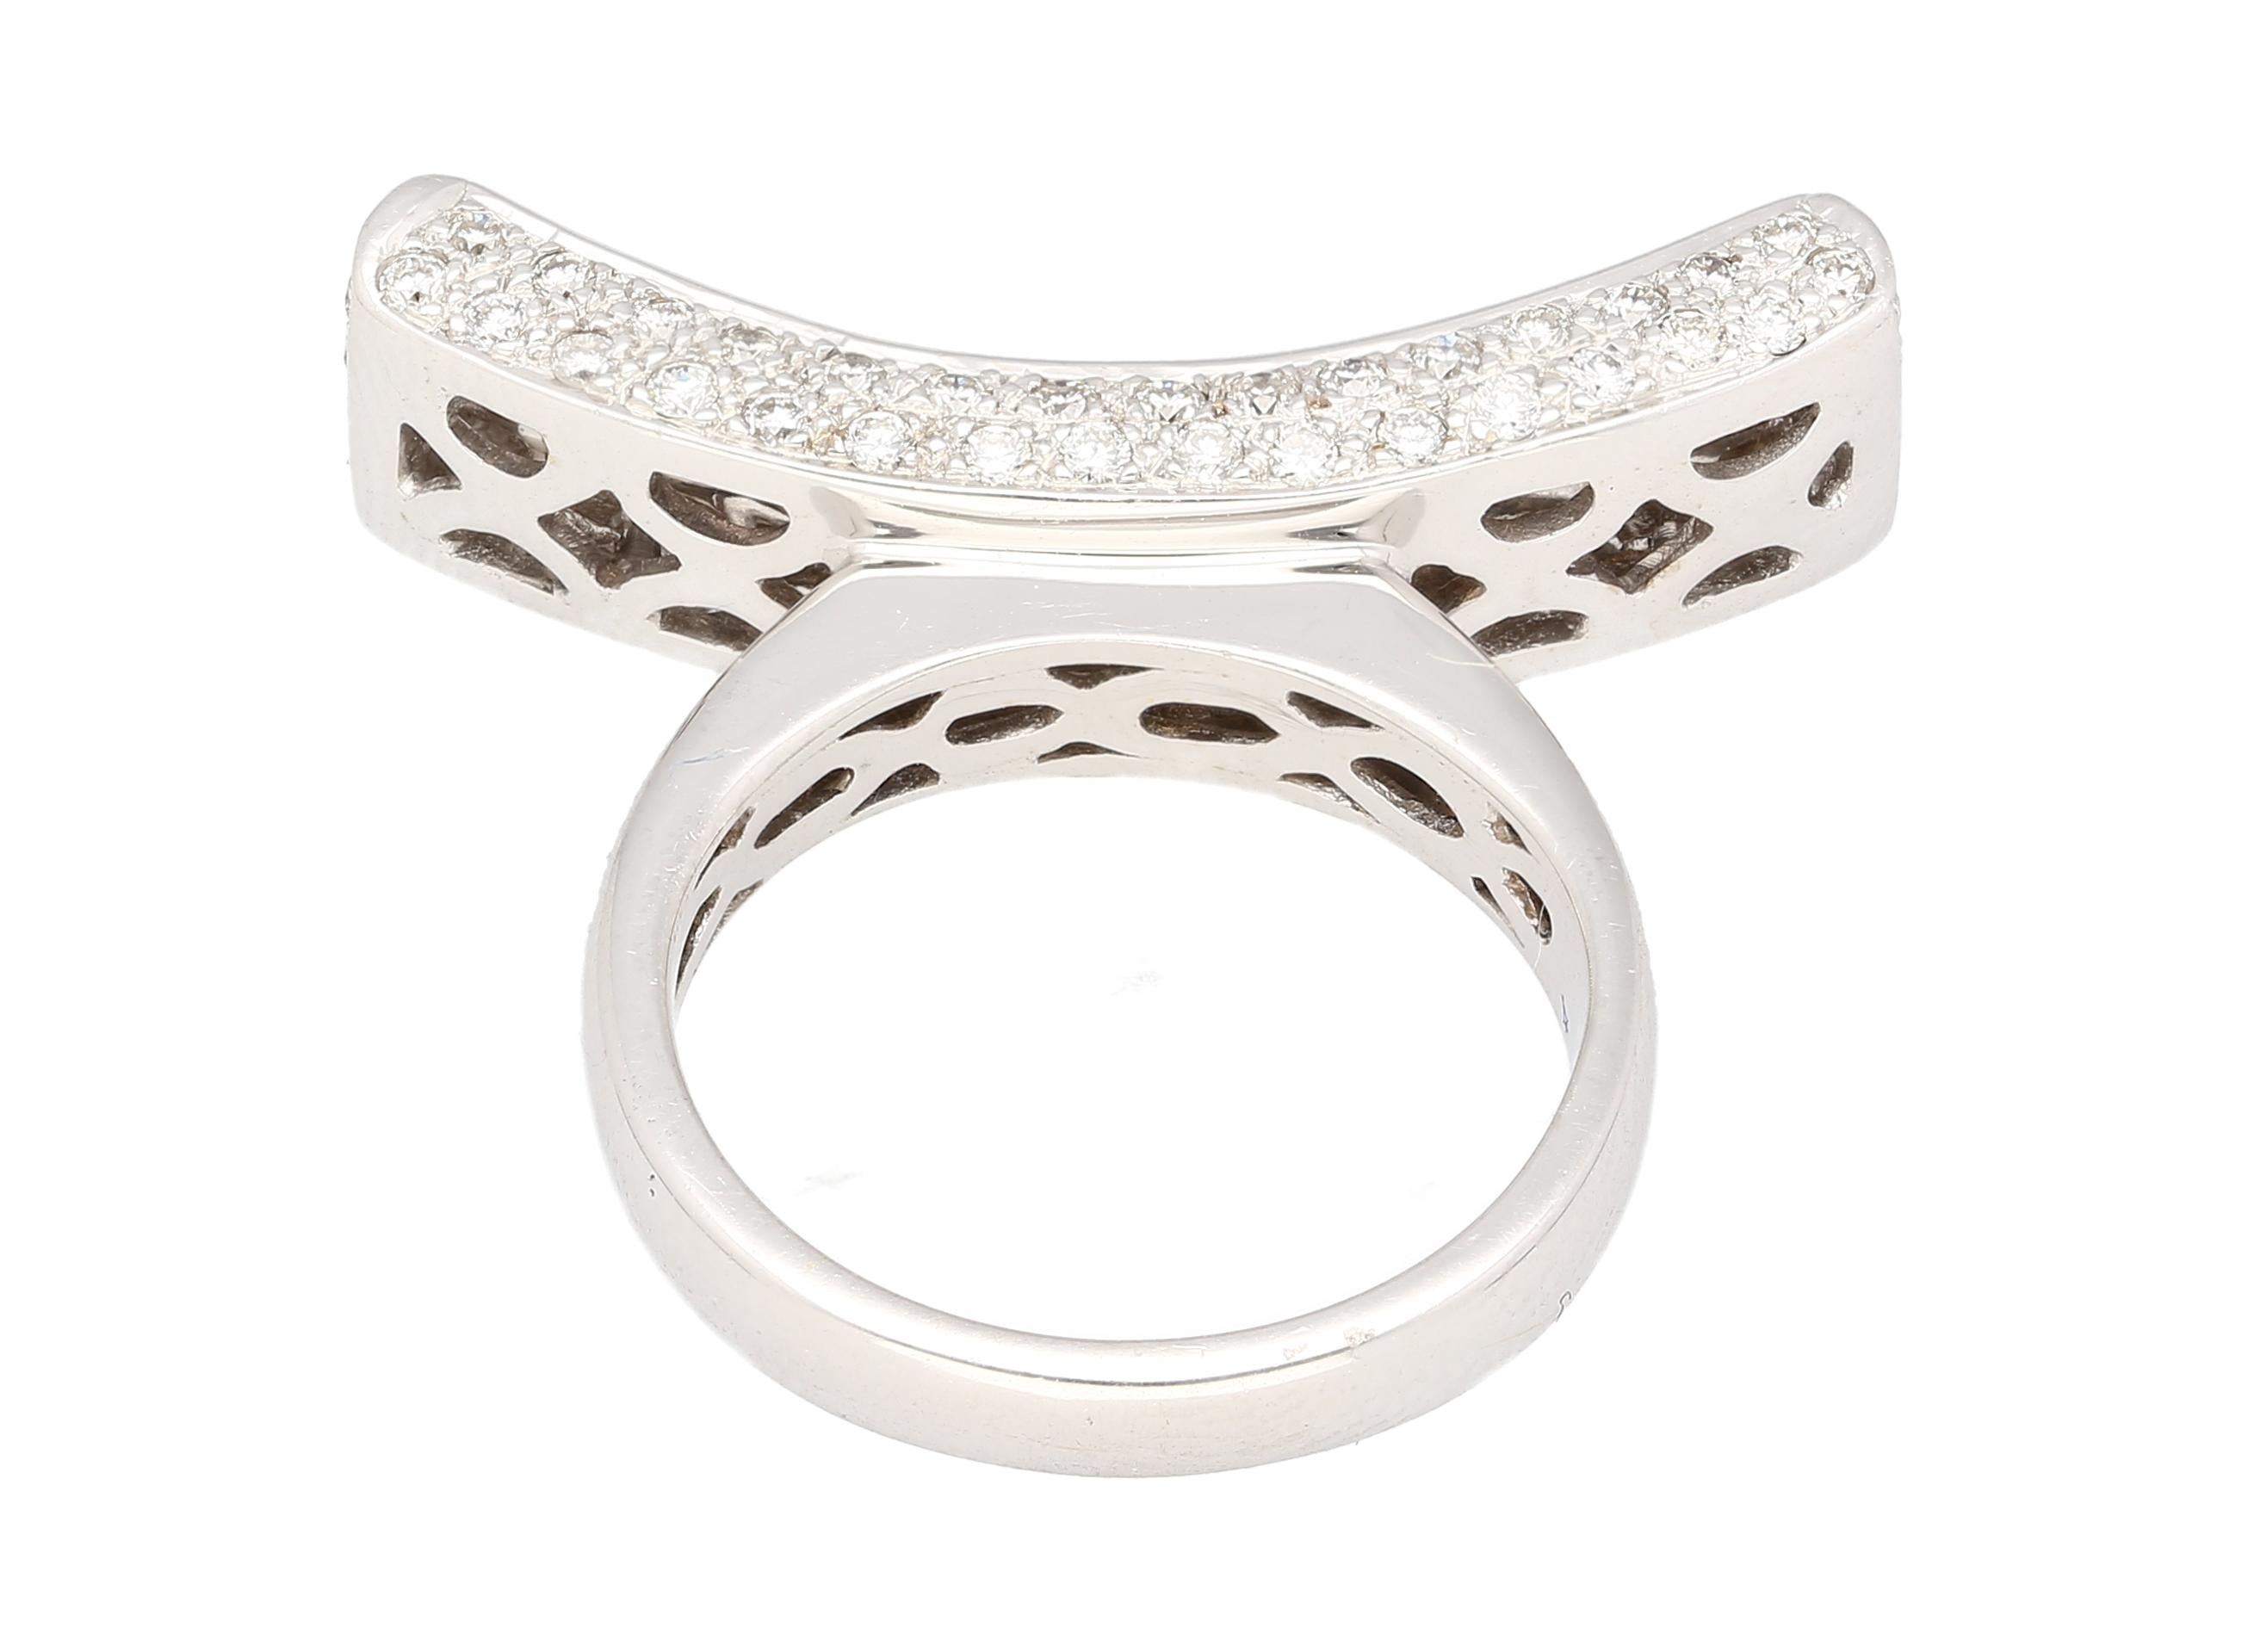 2 Carat Princess Cut Diamond Encrusted Curved Top Overlap Ring in 18K